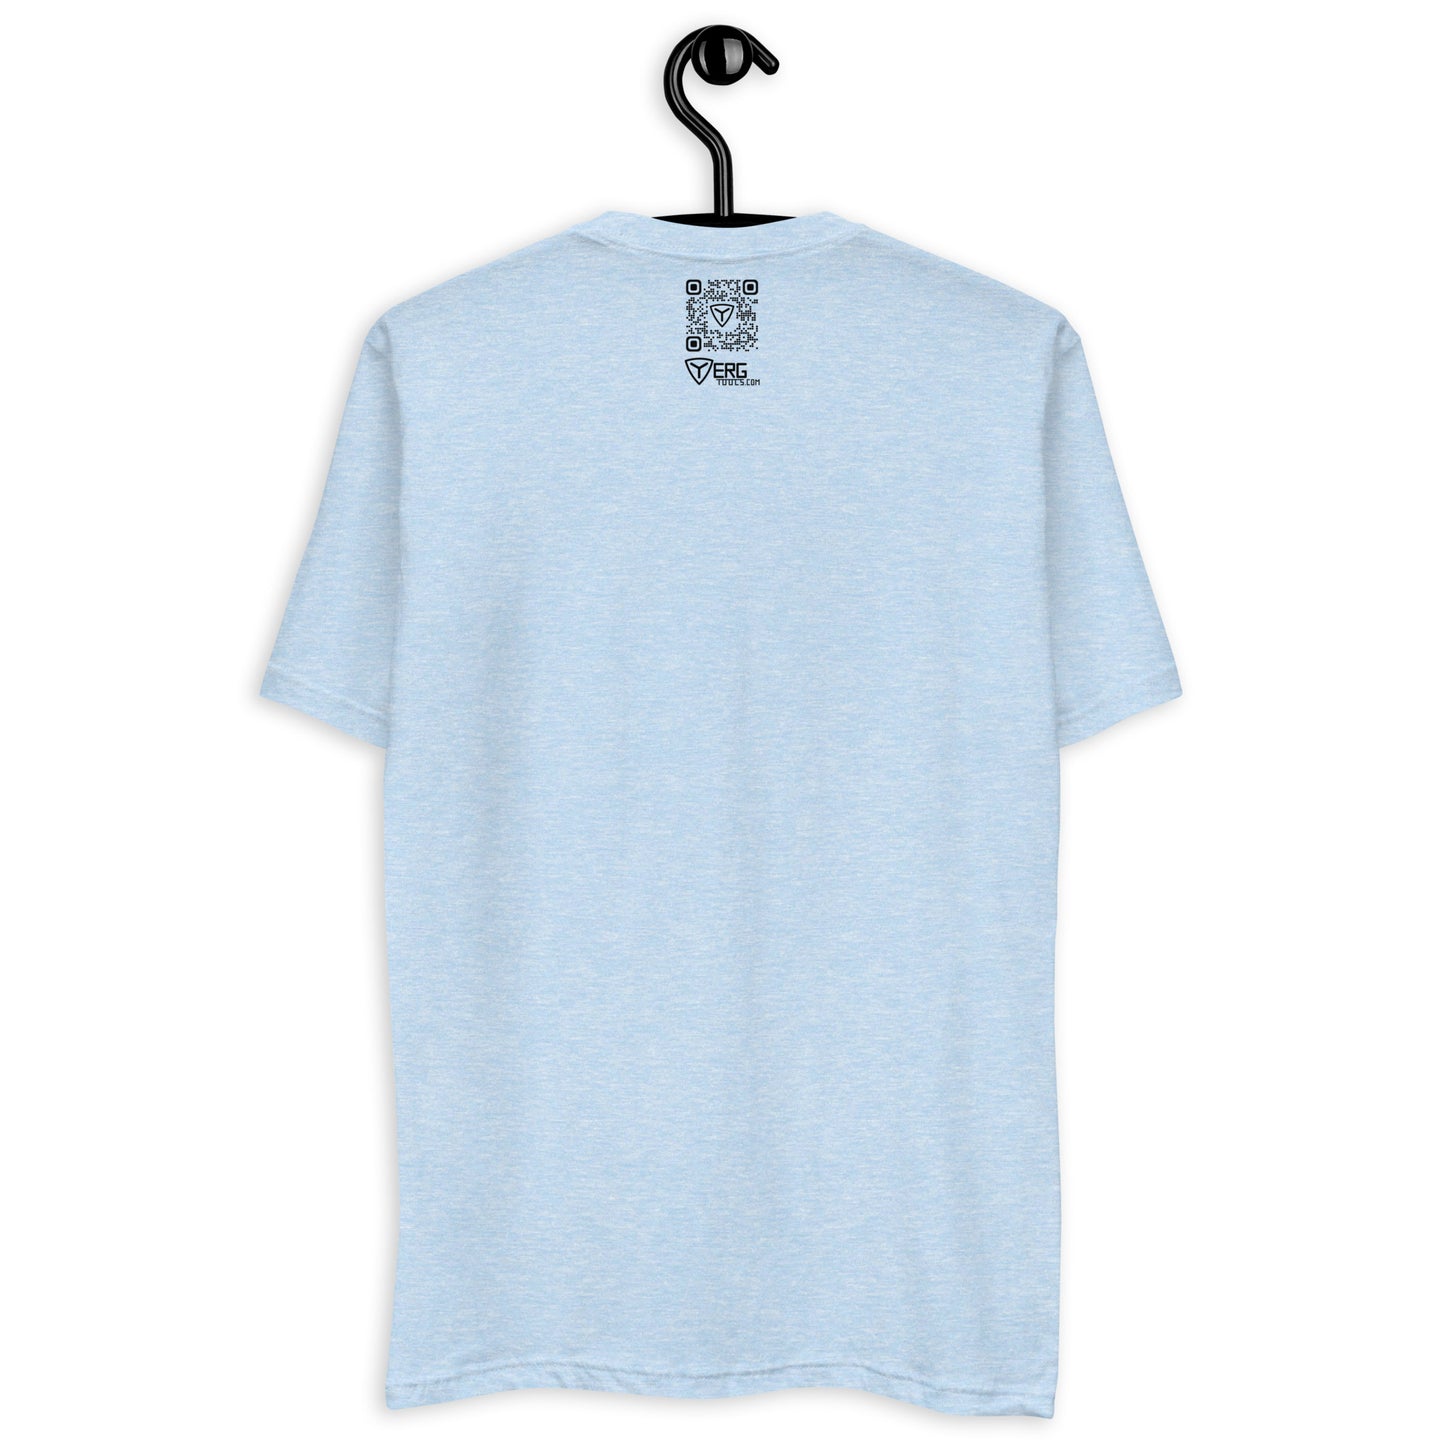 Yerg Skrȳb Silhouette T-shirt